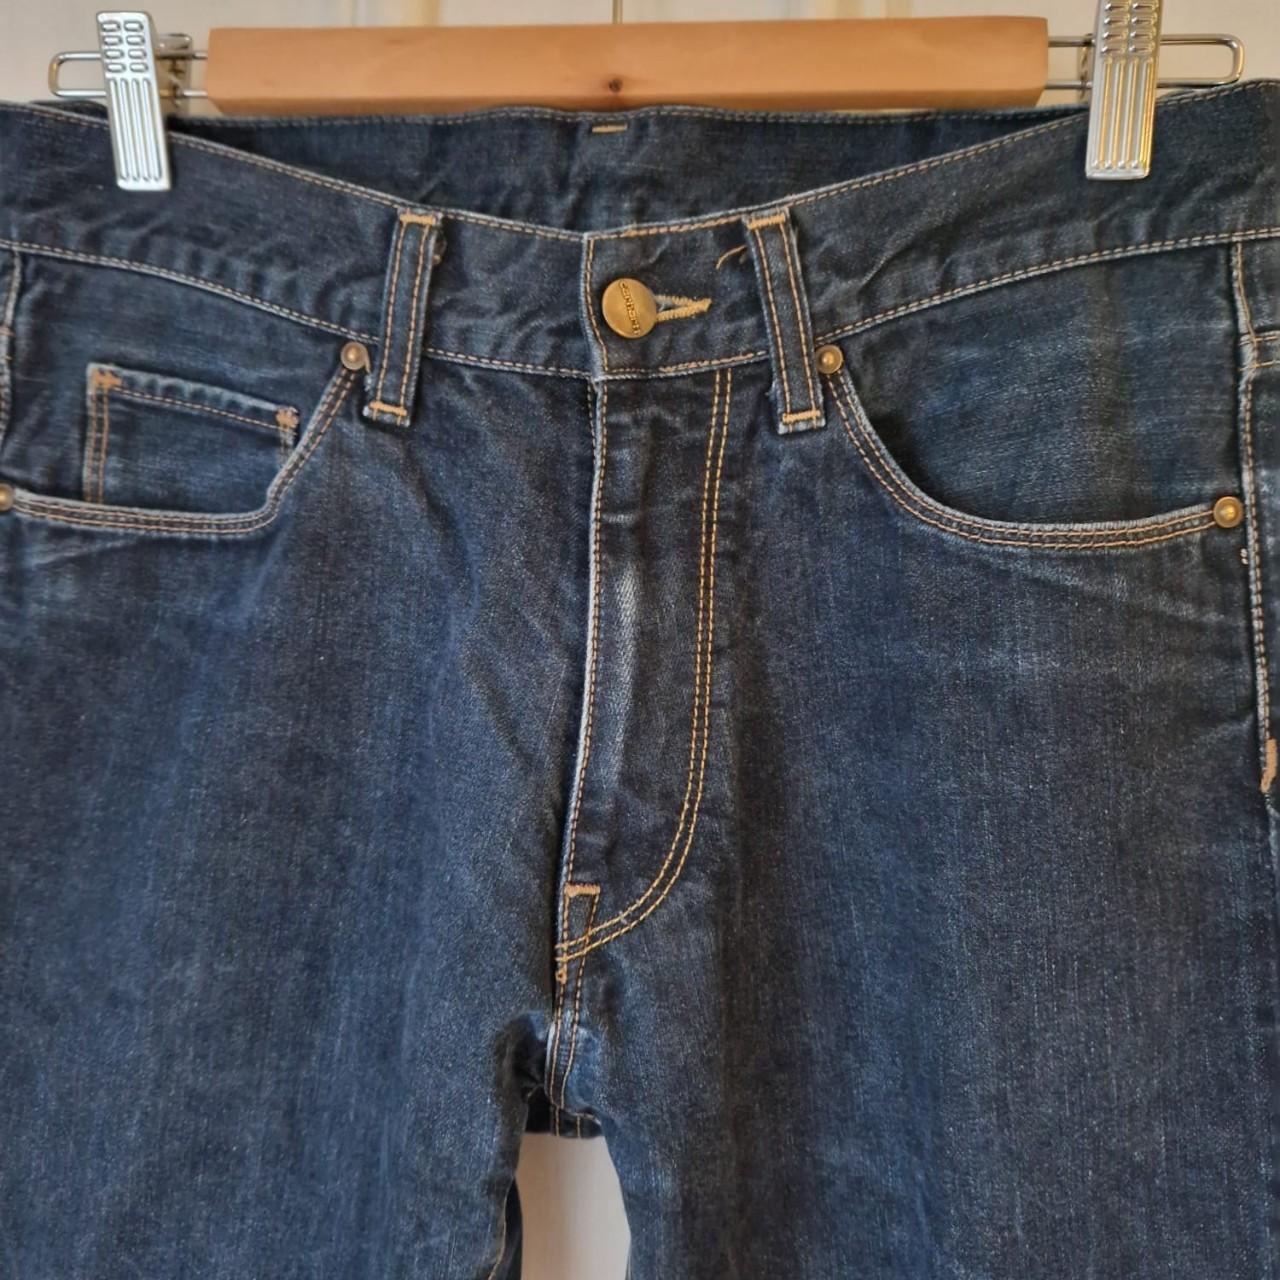 Carhartt Vicious jeans, 30